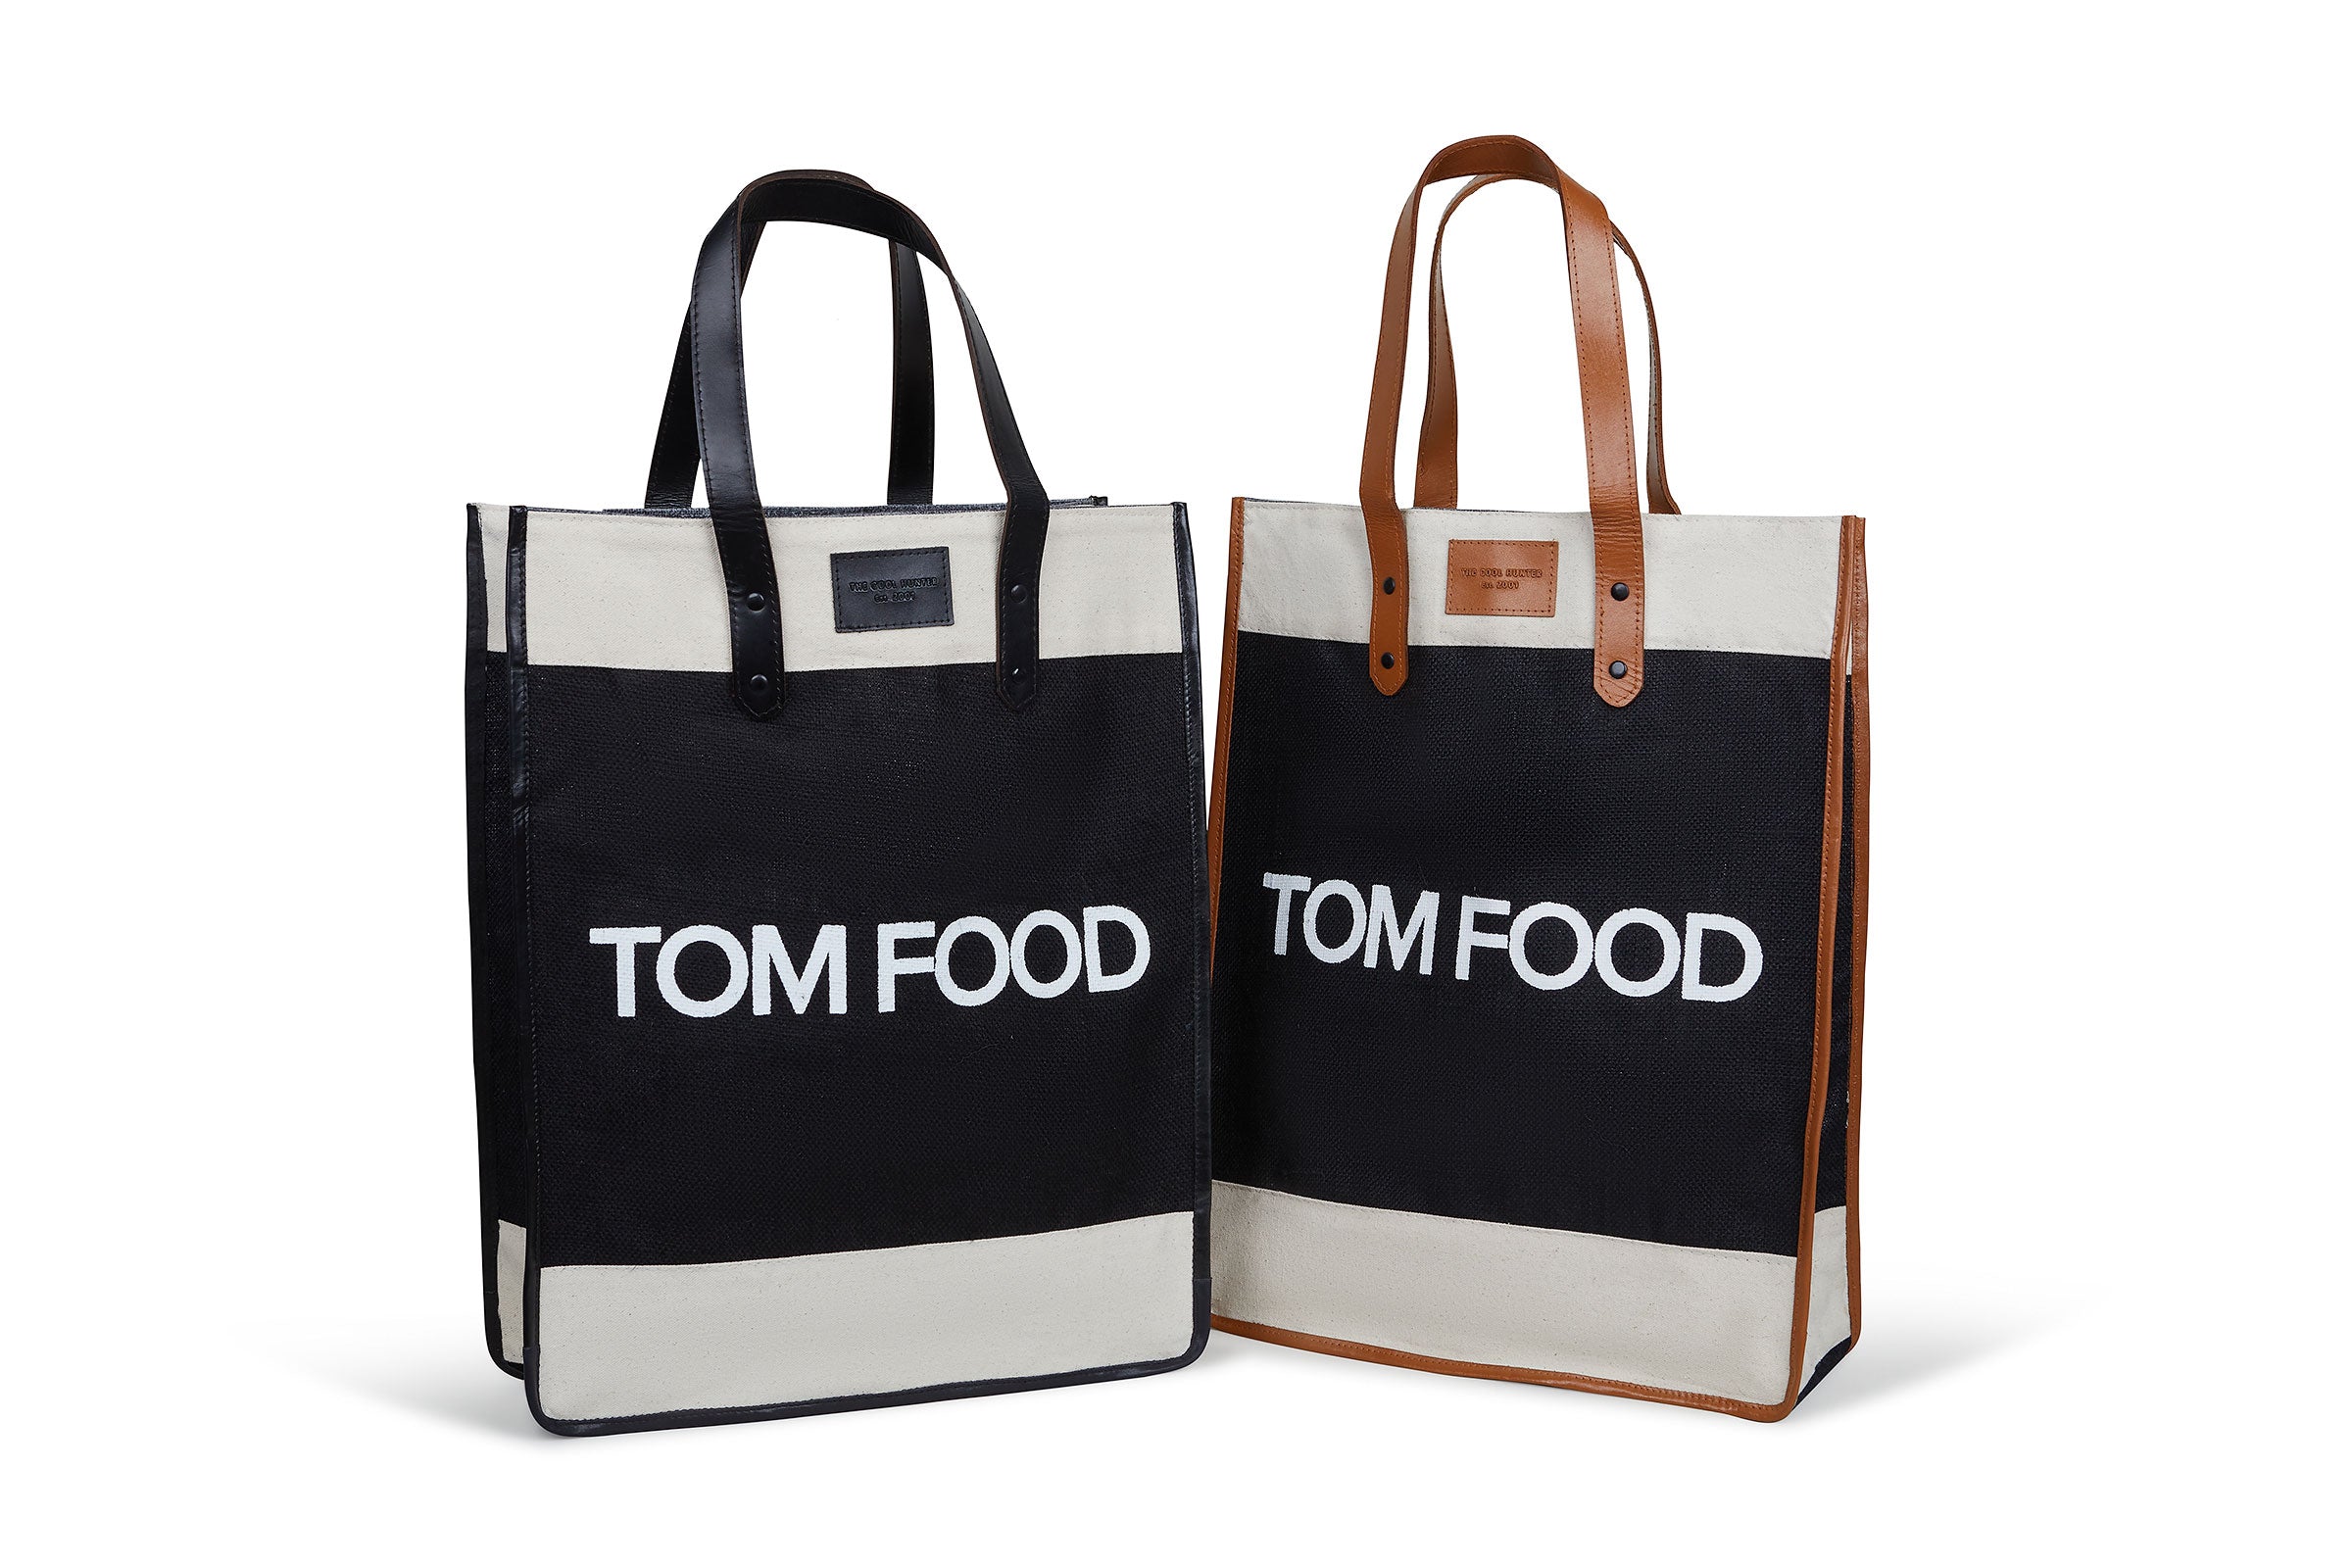 The Cool Hunter Market Bag Tan Leather - Tom Food - NEW